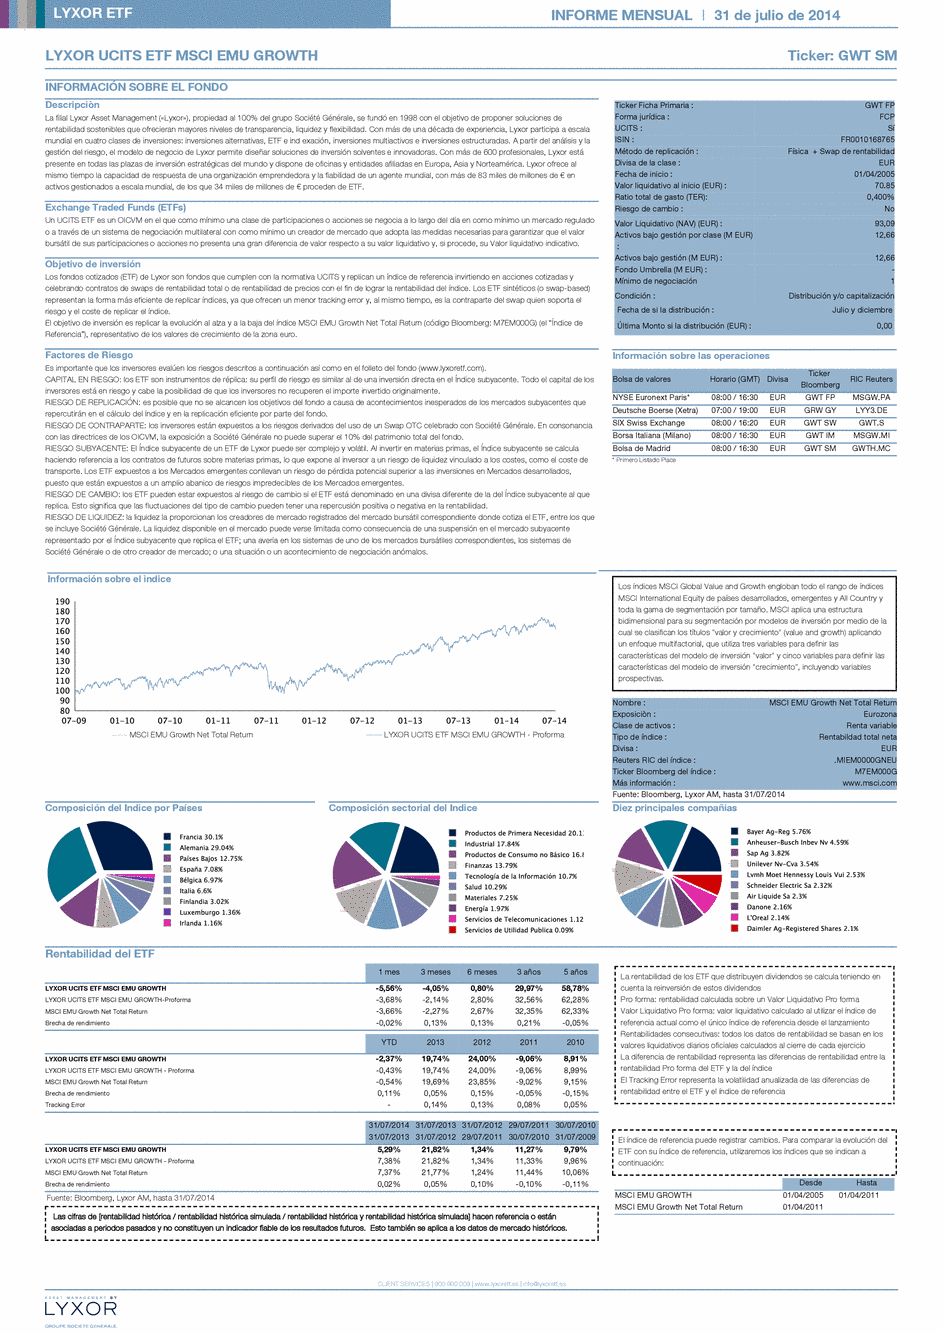 Reporting LYXOR UCITS ETF MSCI EMU GROWTH - 31/07/2014 - Spanish